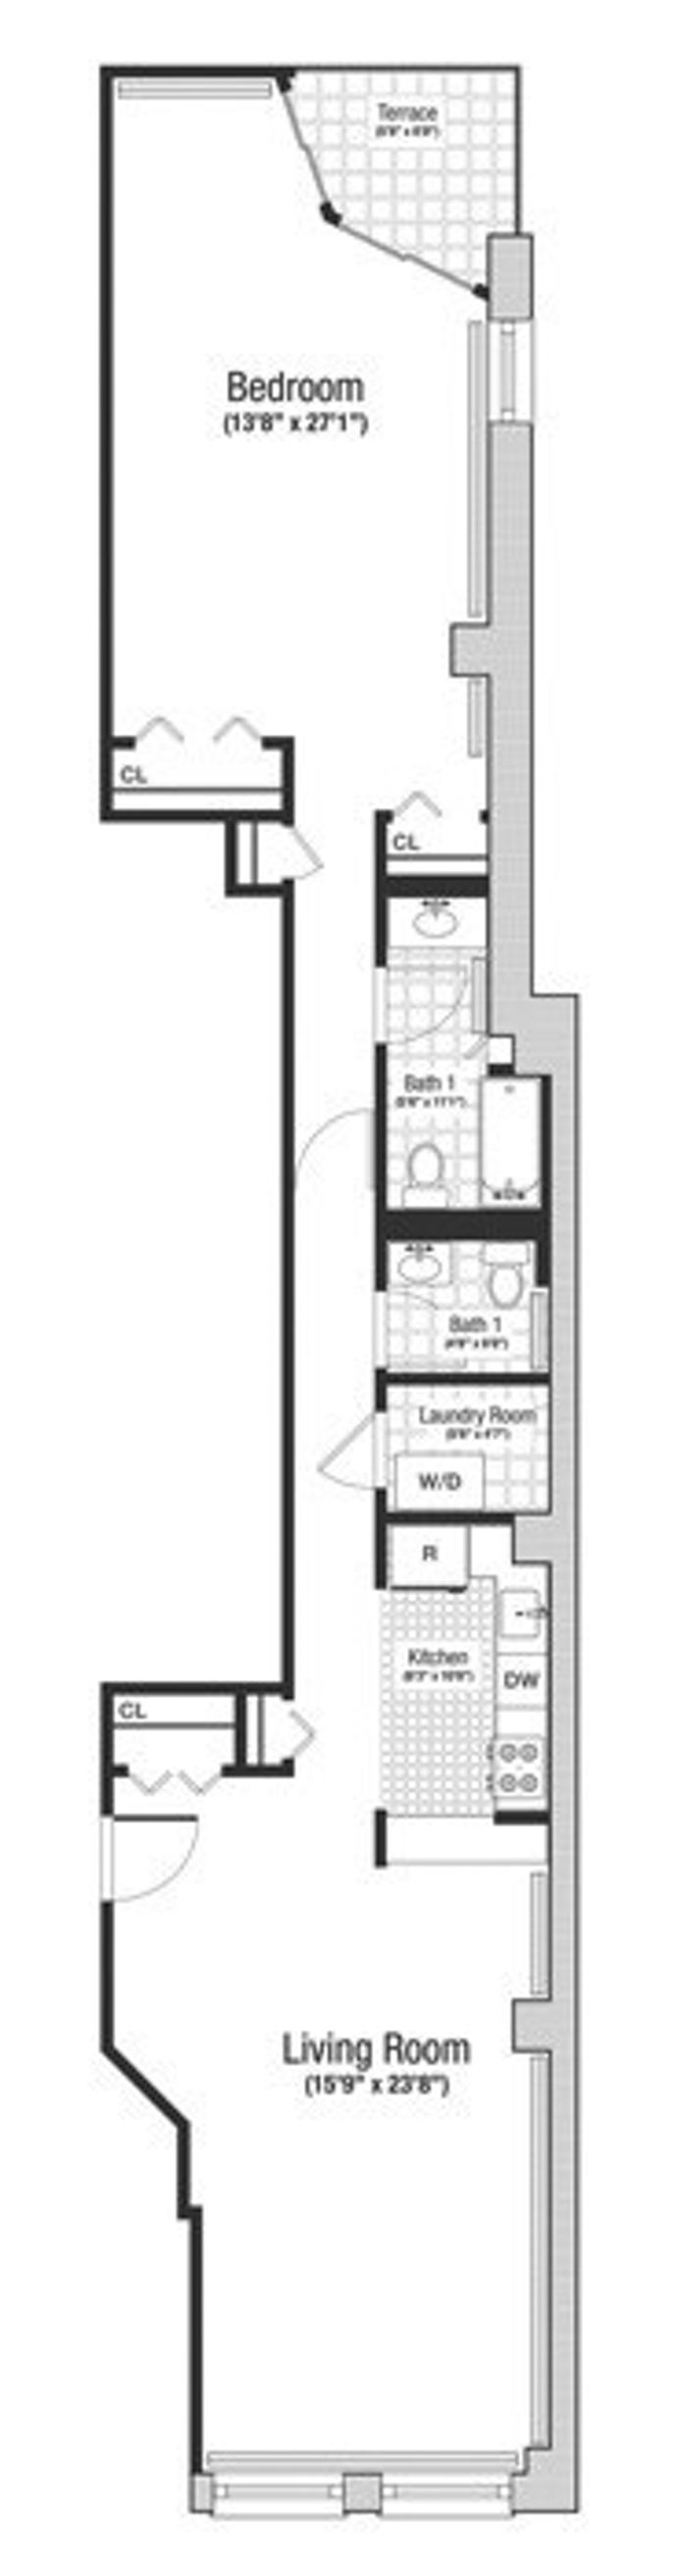 Floorplan for 36 Laight Street, 5A